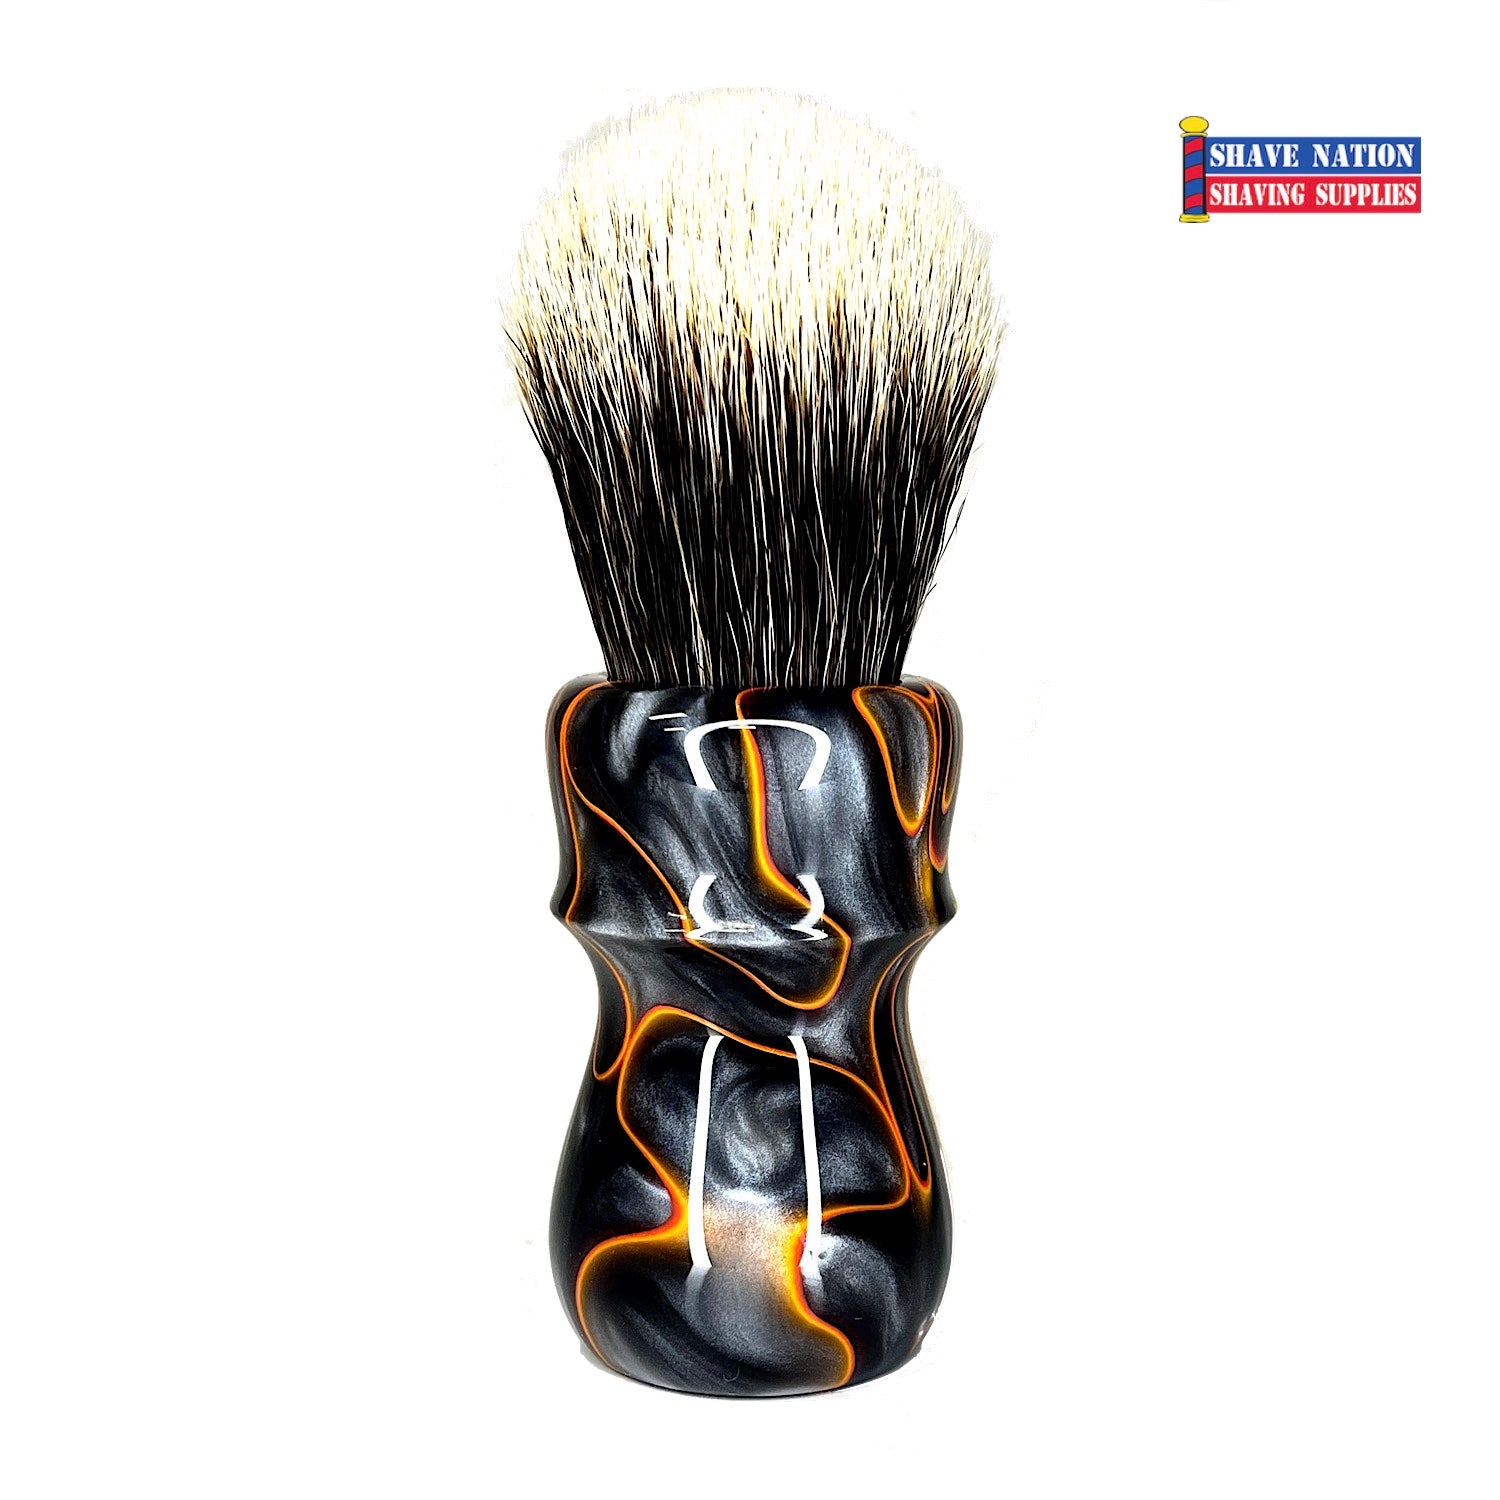 shave-nation-smoke-fire-xl-fine-badger-shaving-brush-polished-resin-handle_2048x2048.jpg